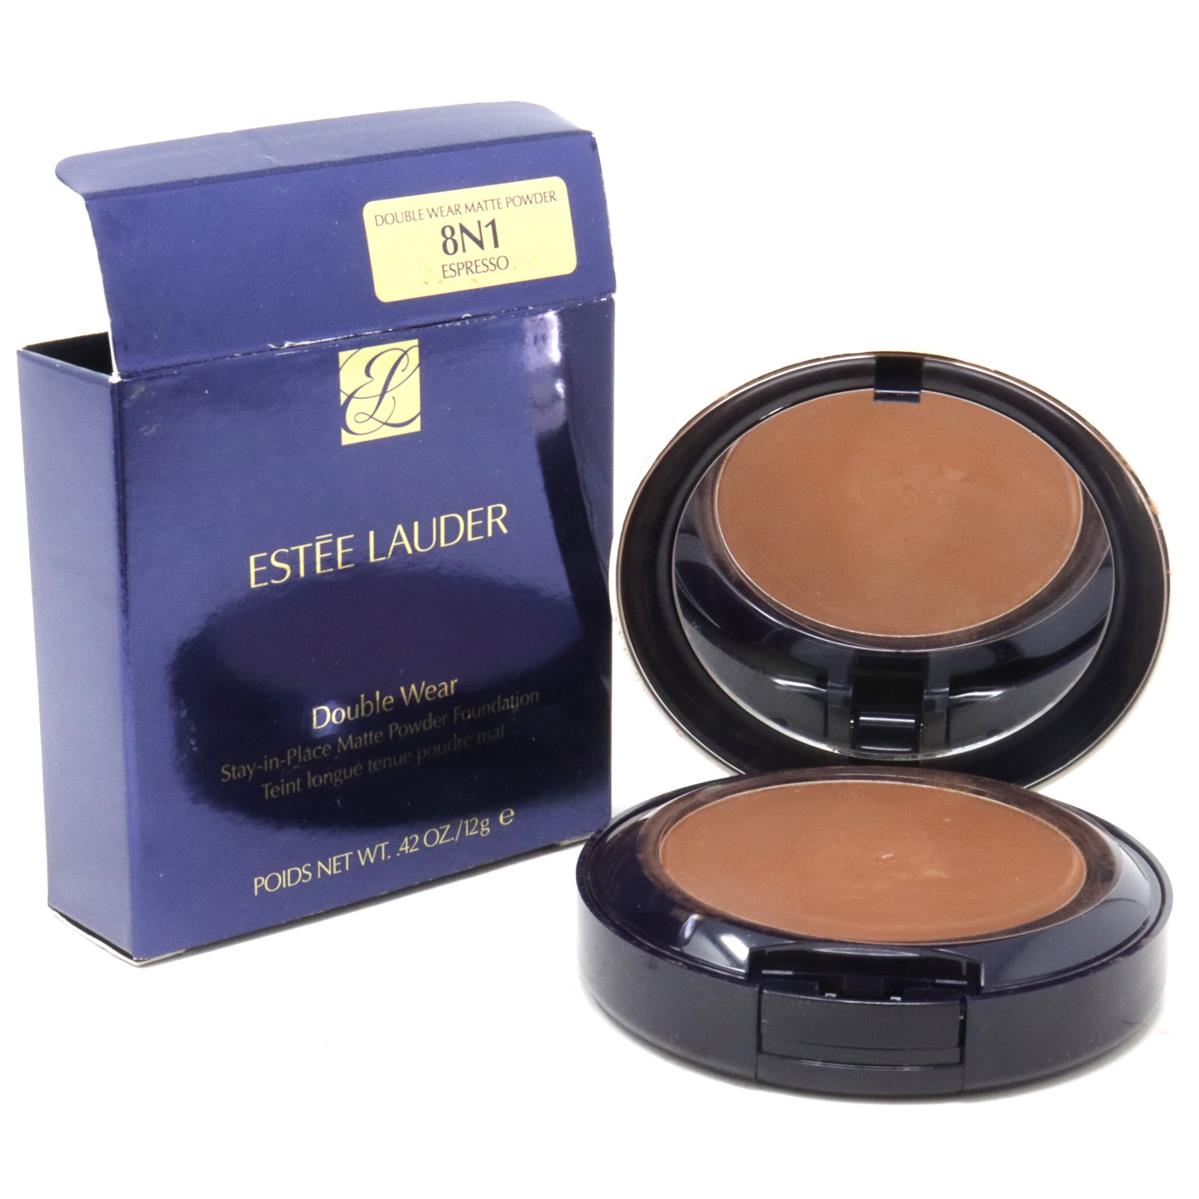 Estee Lauder Double Wear Stay-in-in Place Matte Powder Foundation 0.42oz 8N1 Espresso